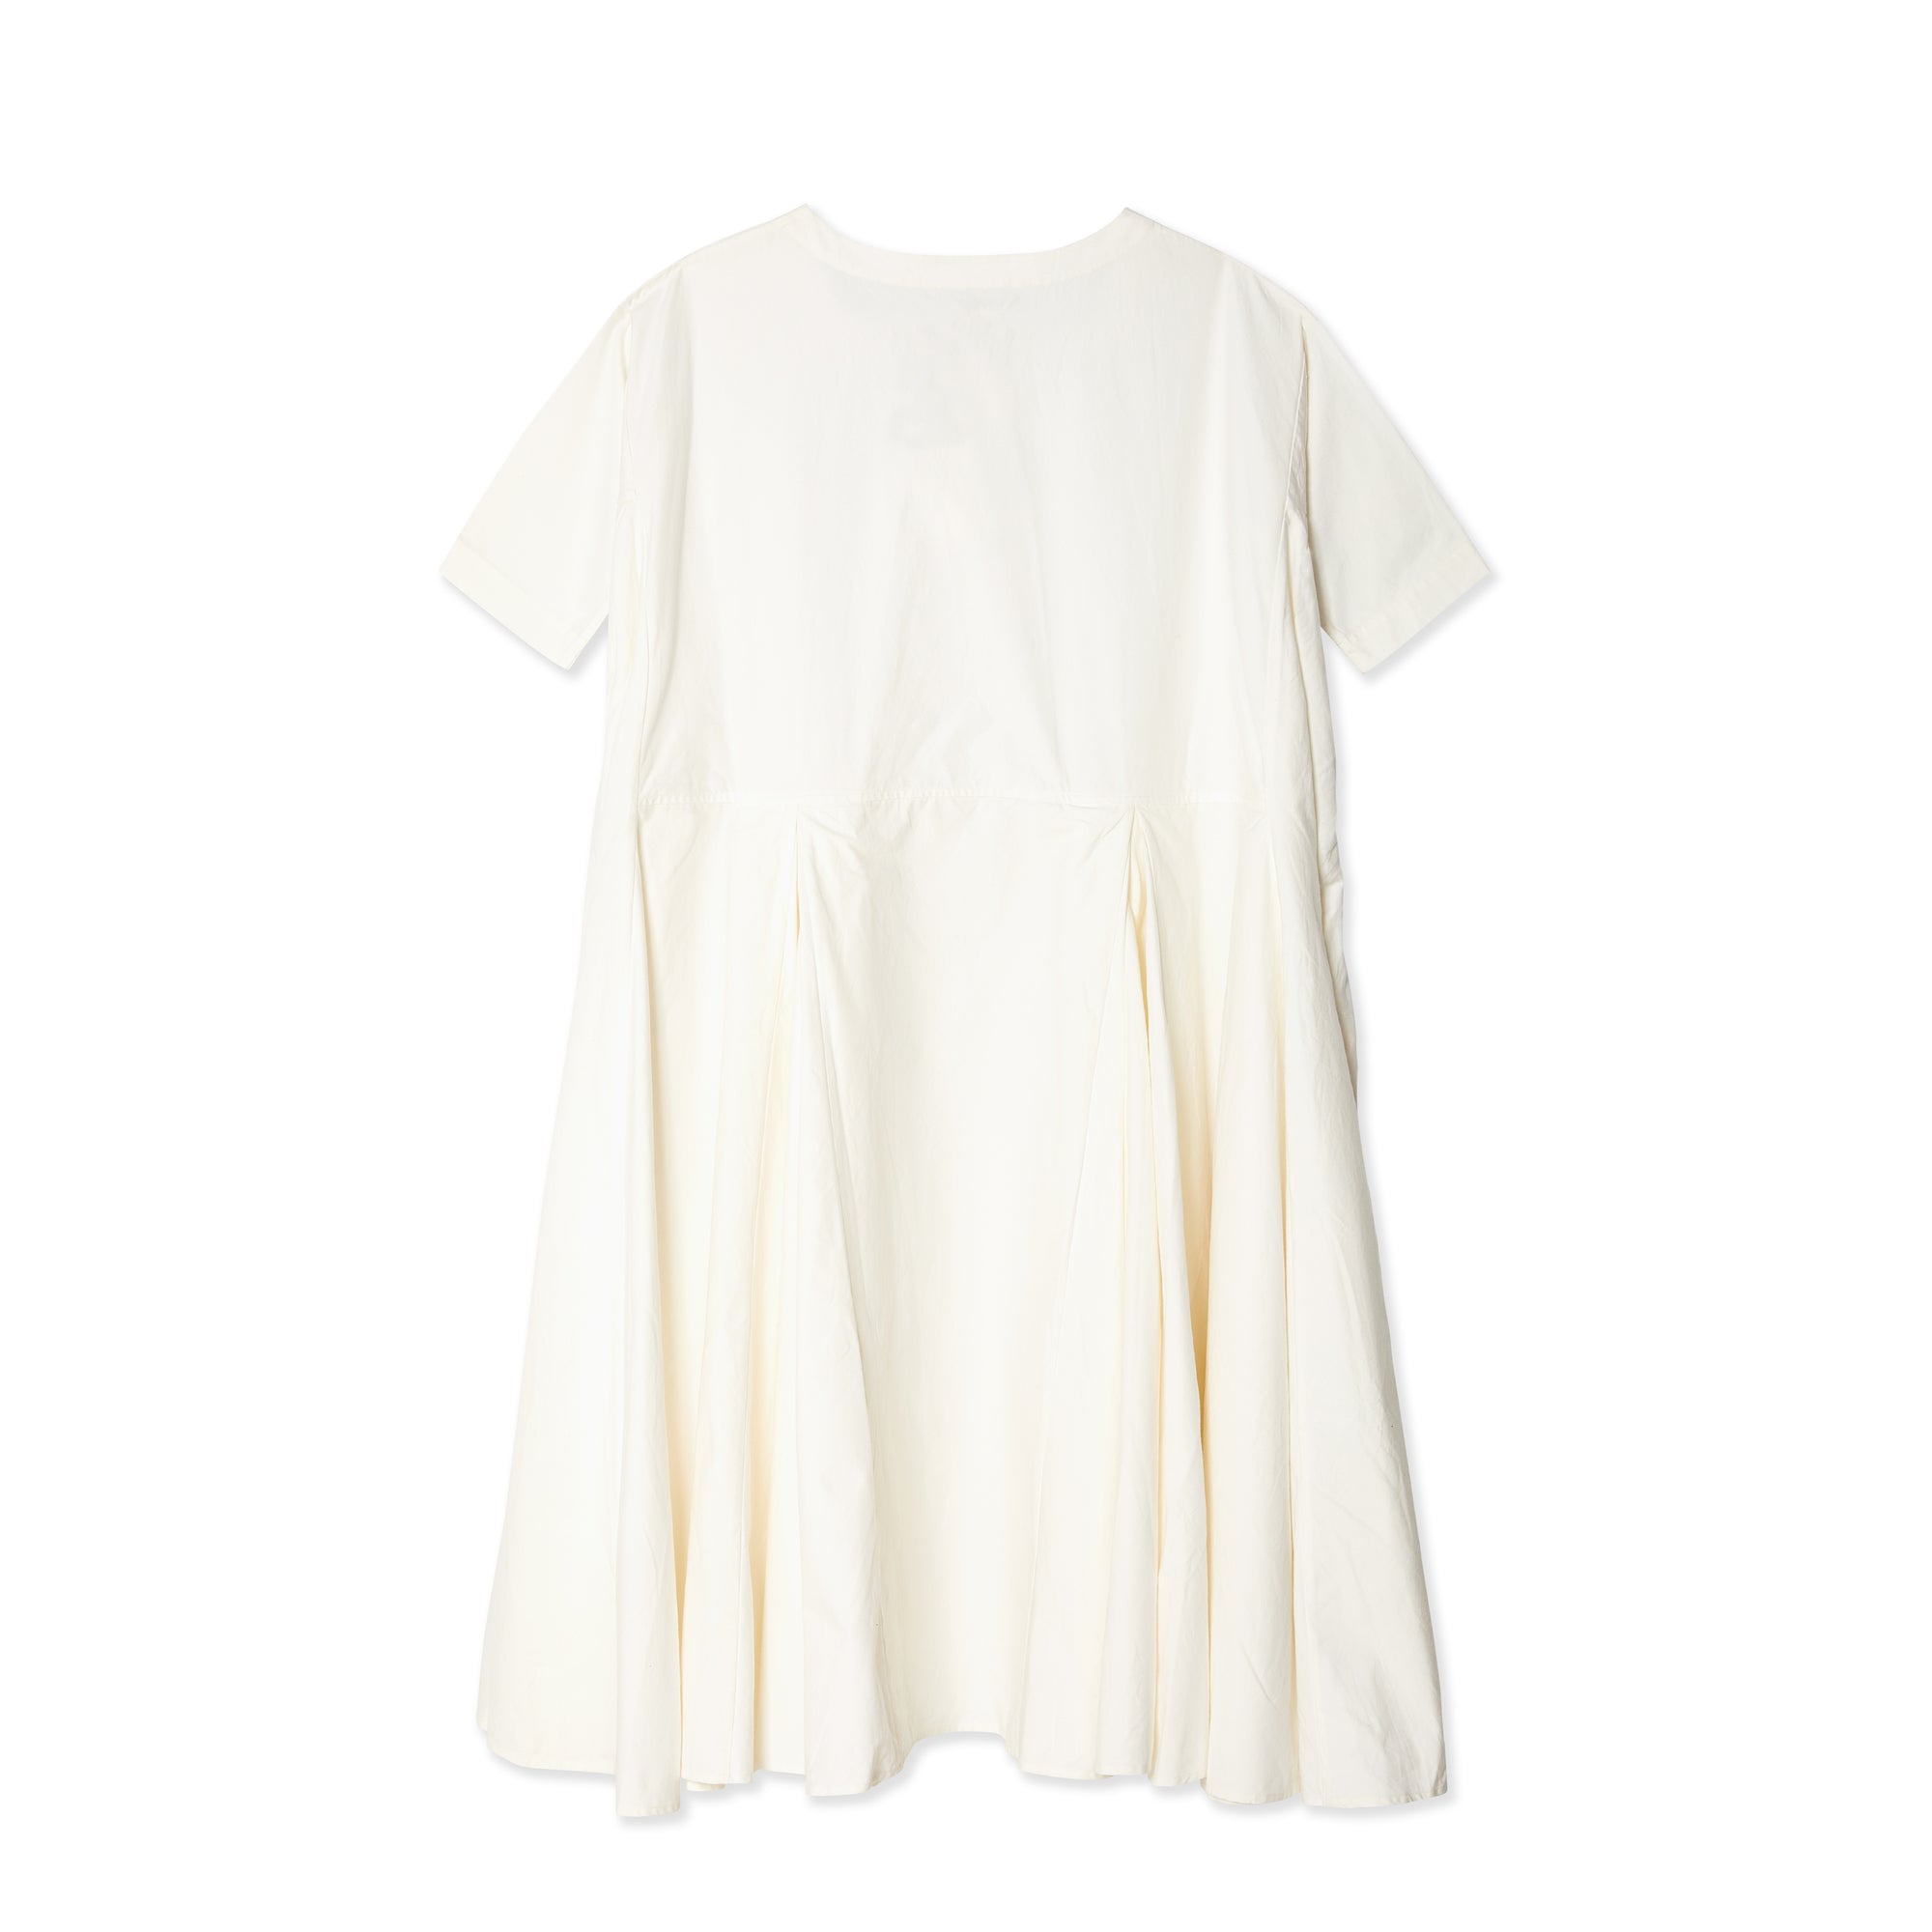 Egg Trading - Women's Pleated Dress - (White) view 2